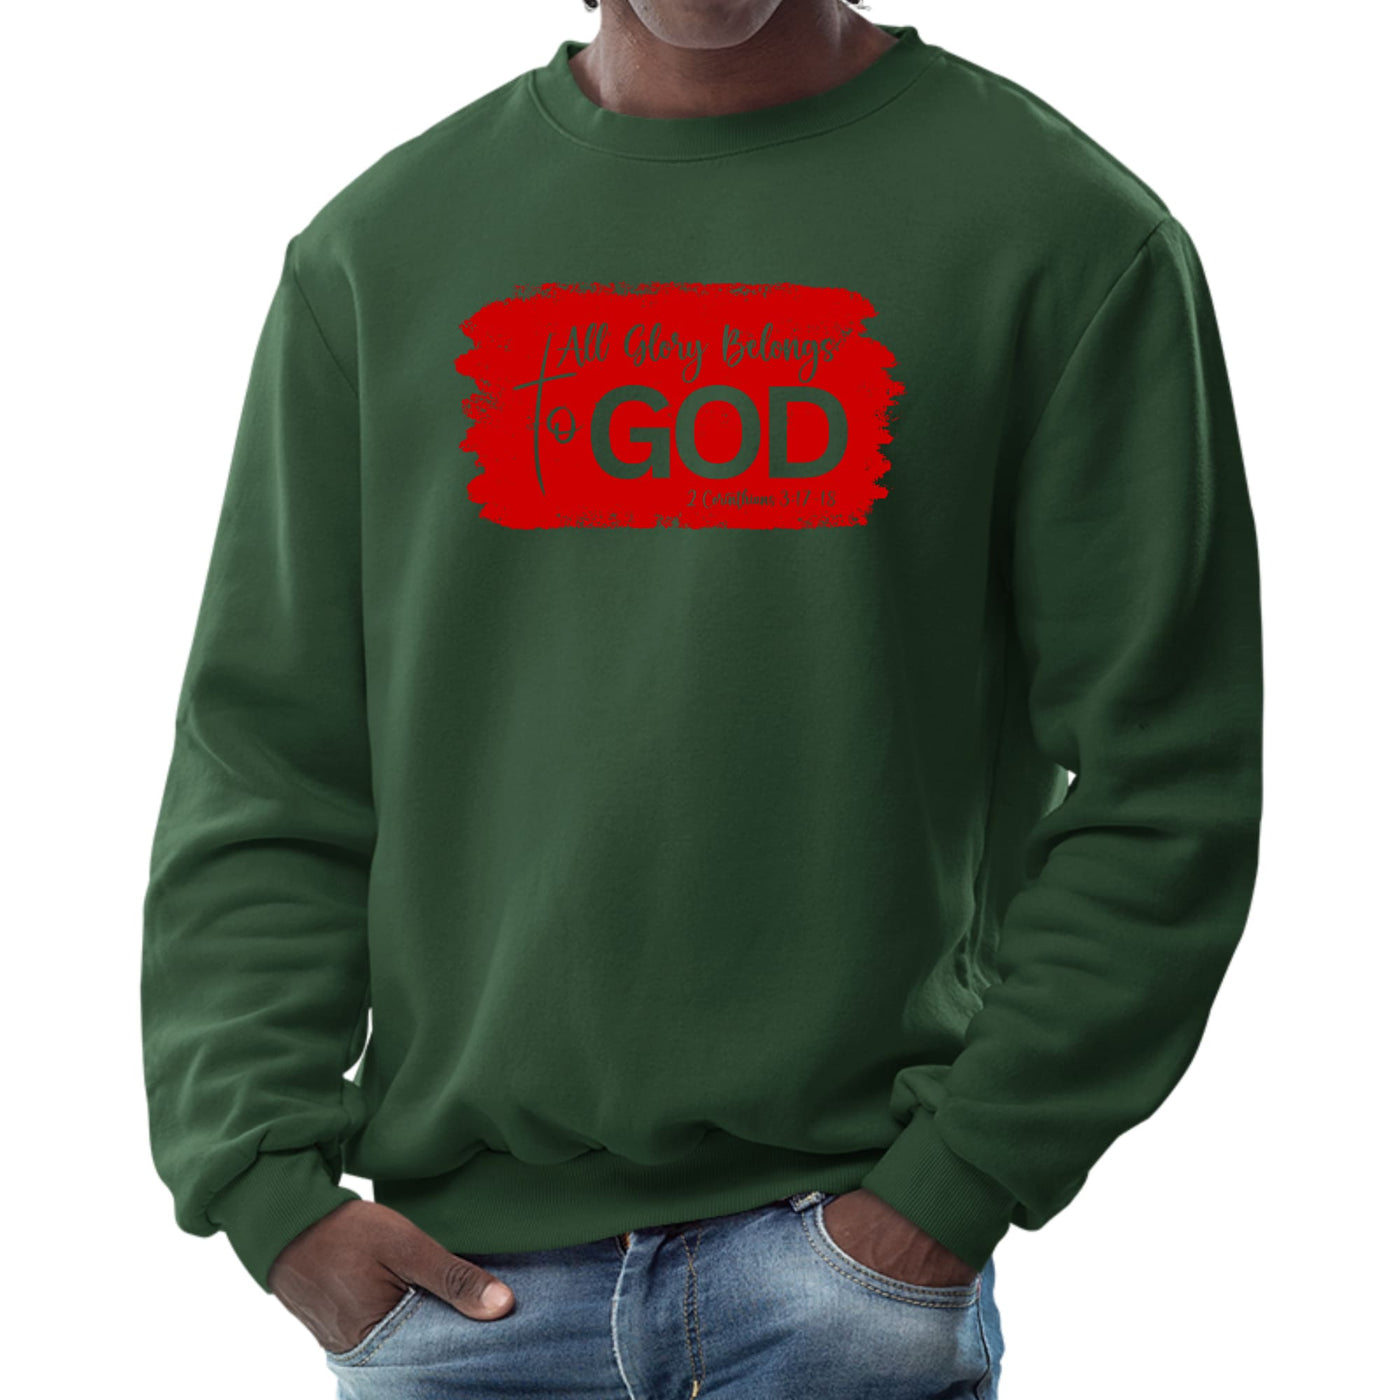 Mens Graphic Sweatshirt All Glory Belongs To God Red - Mens | Sweatshirts